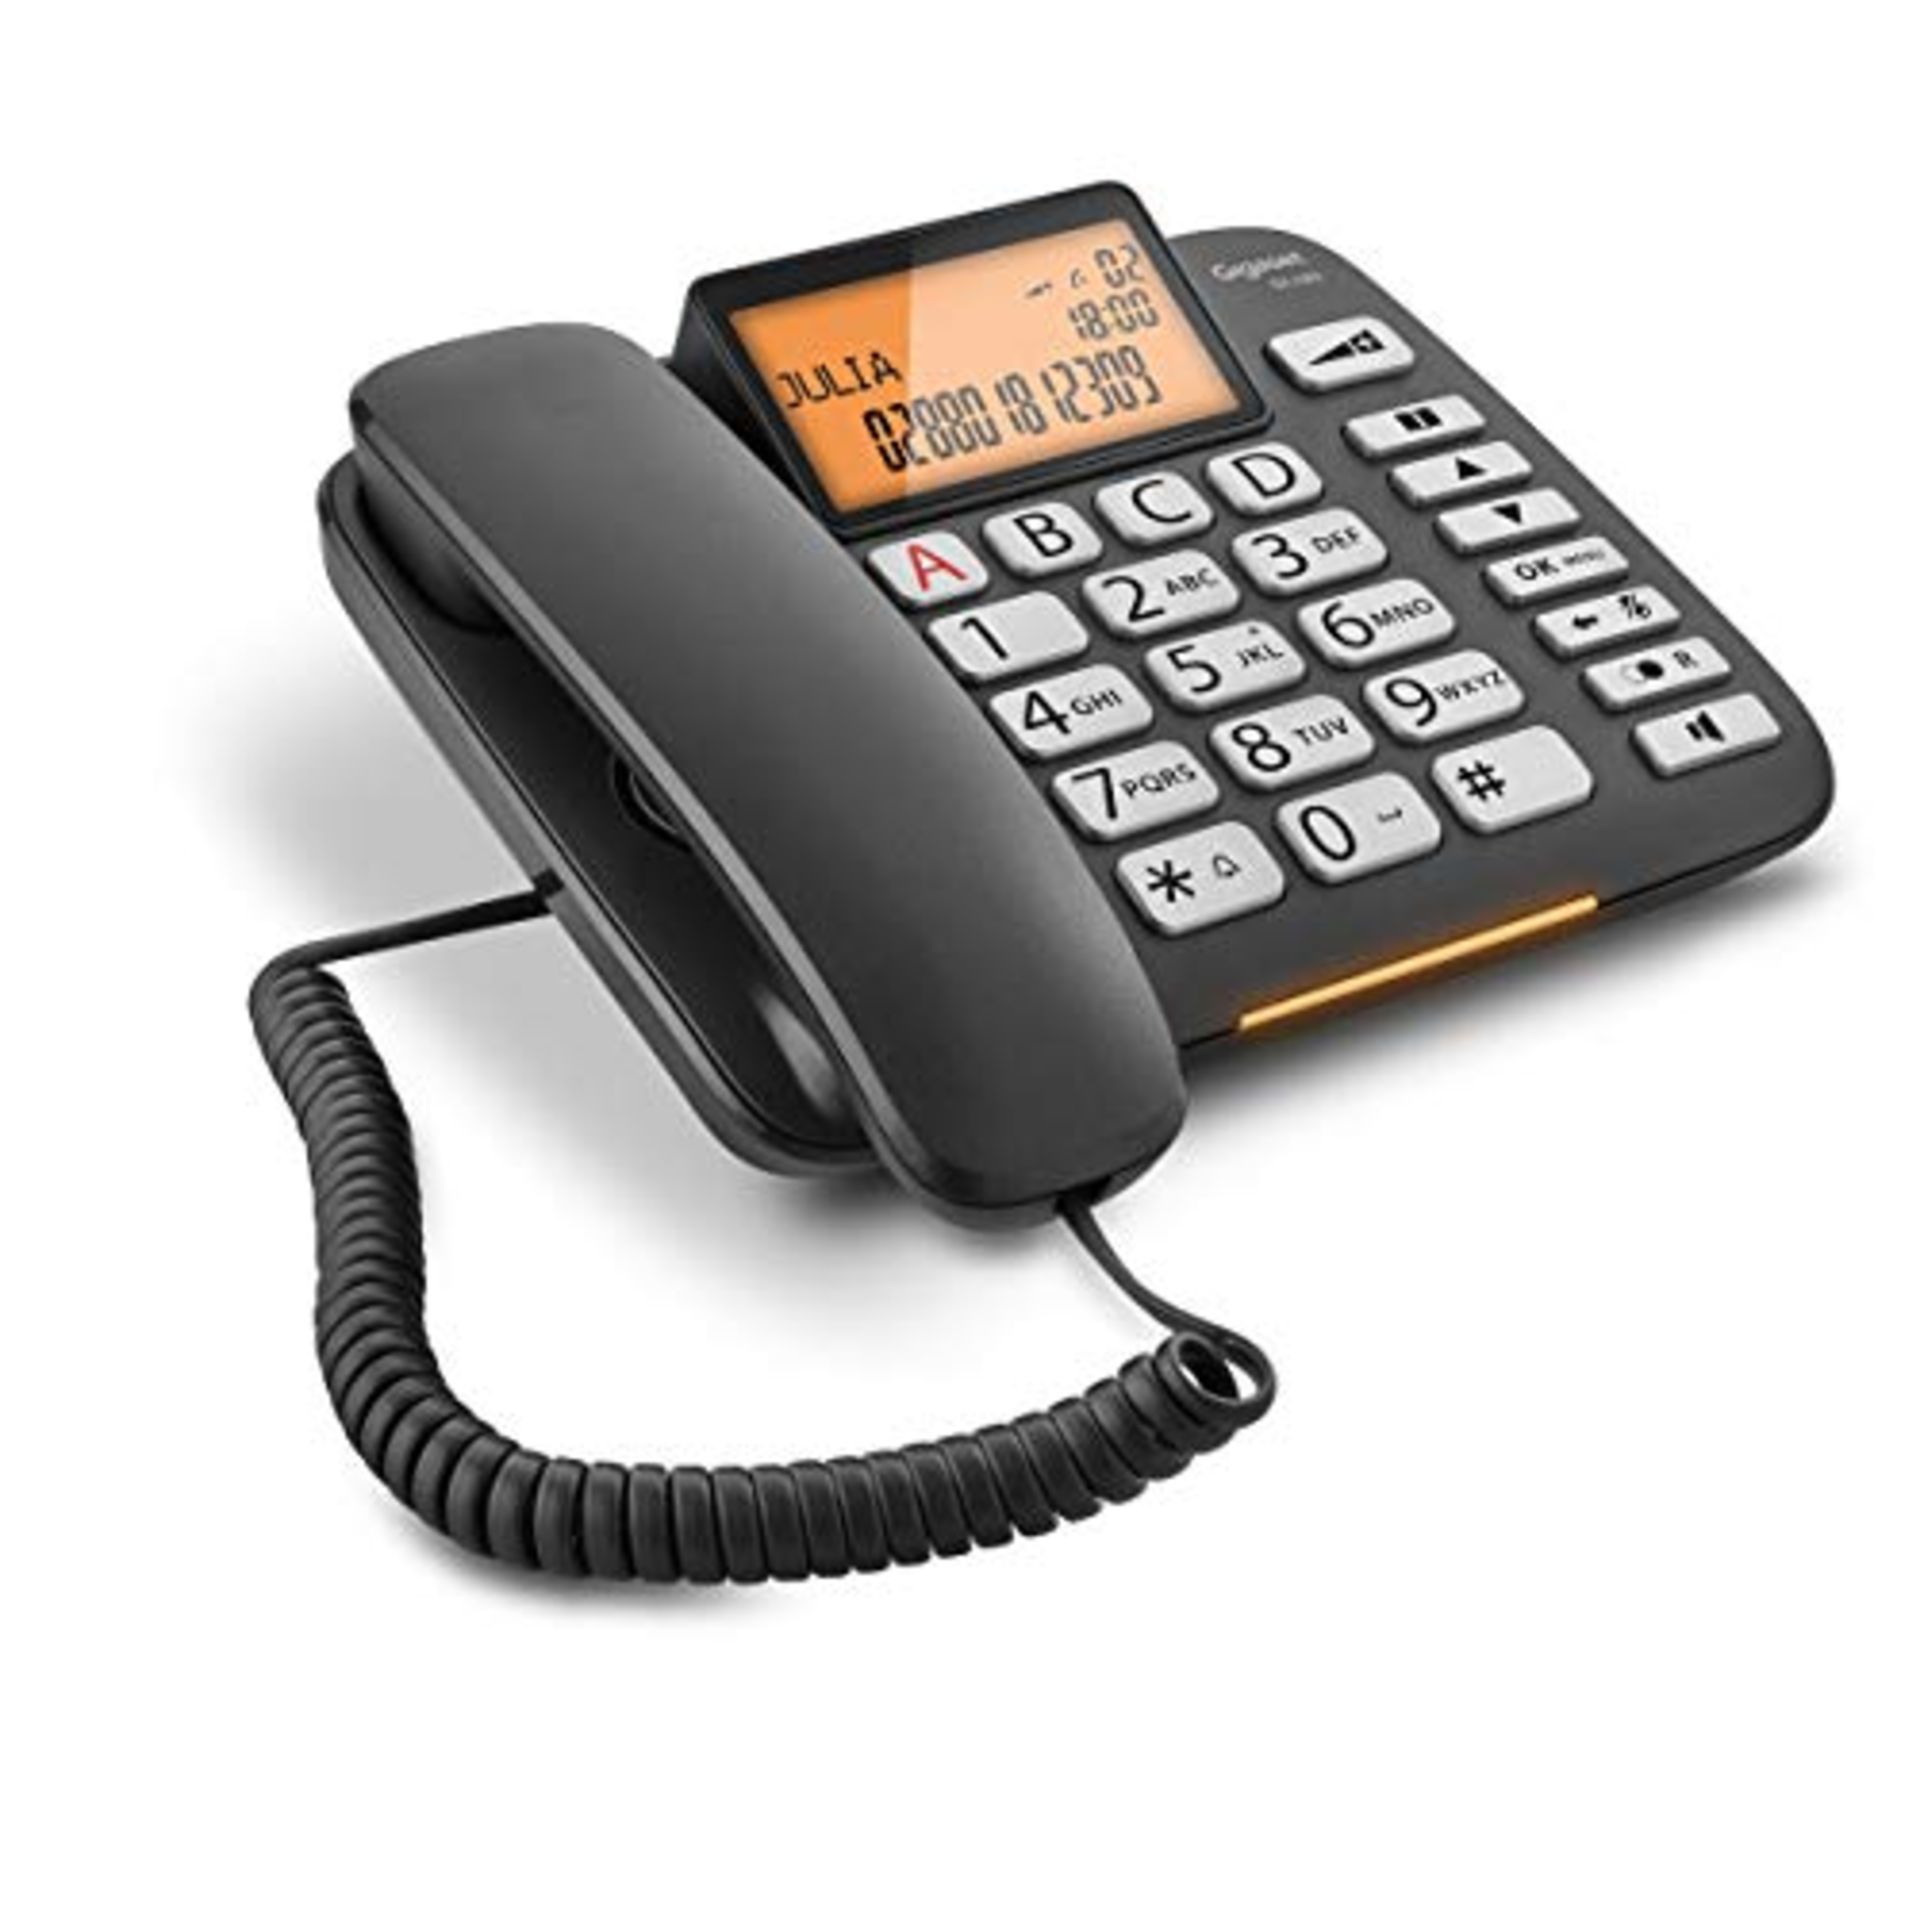 Gigaset DL580 Corded Telephone Black [French Version]